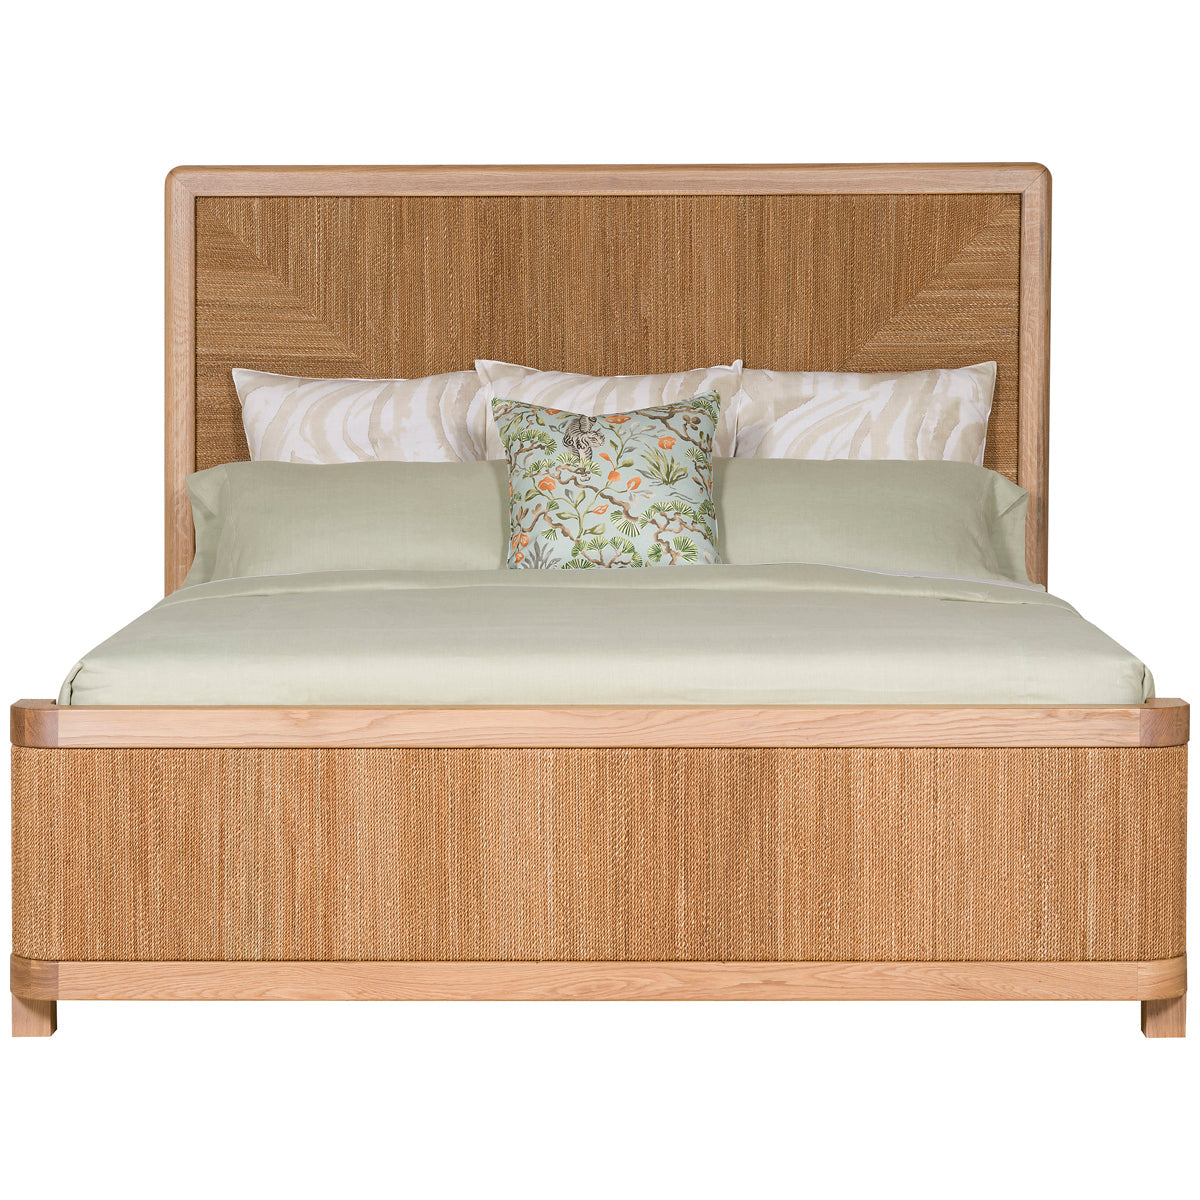 Vanguard Furniture Form Bed